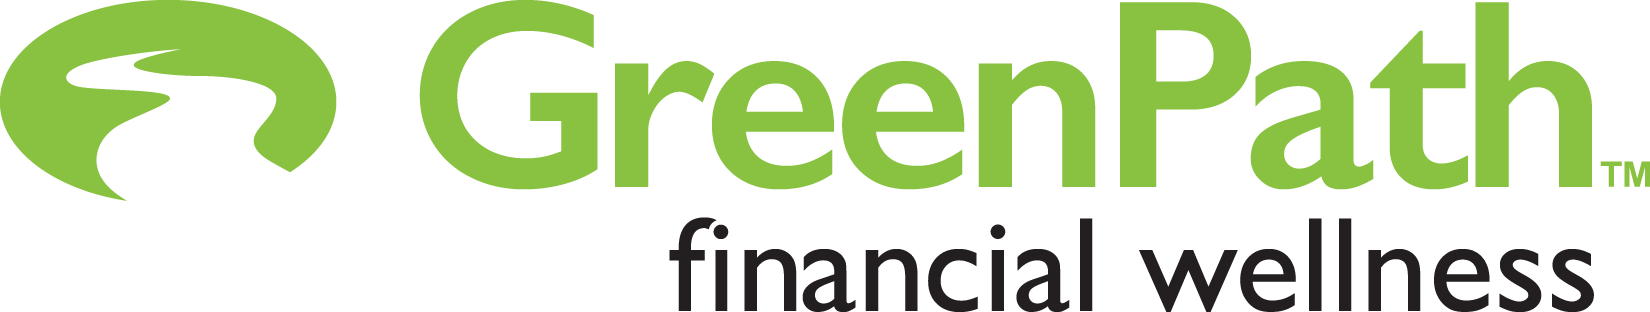 GreenPath Financial Wellness Logo.png